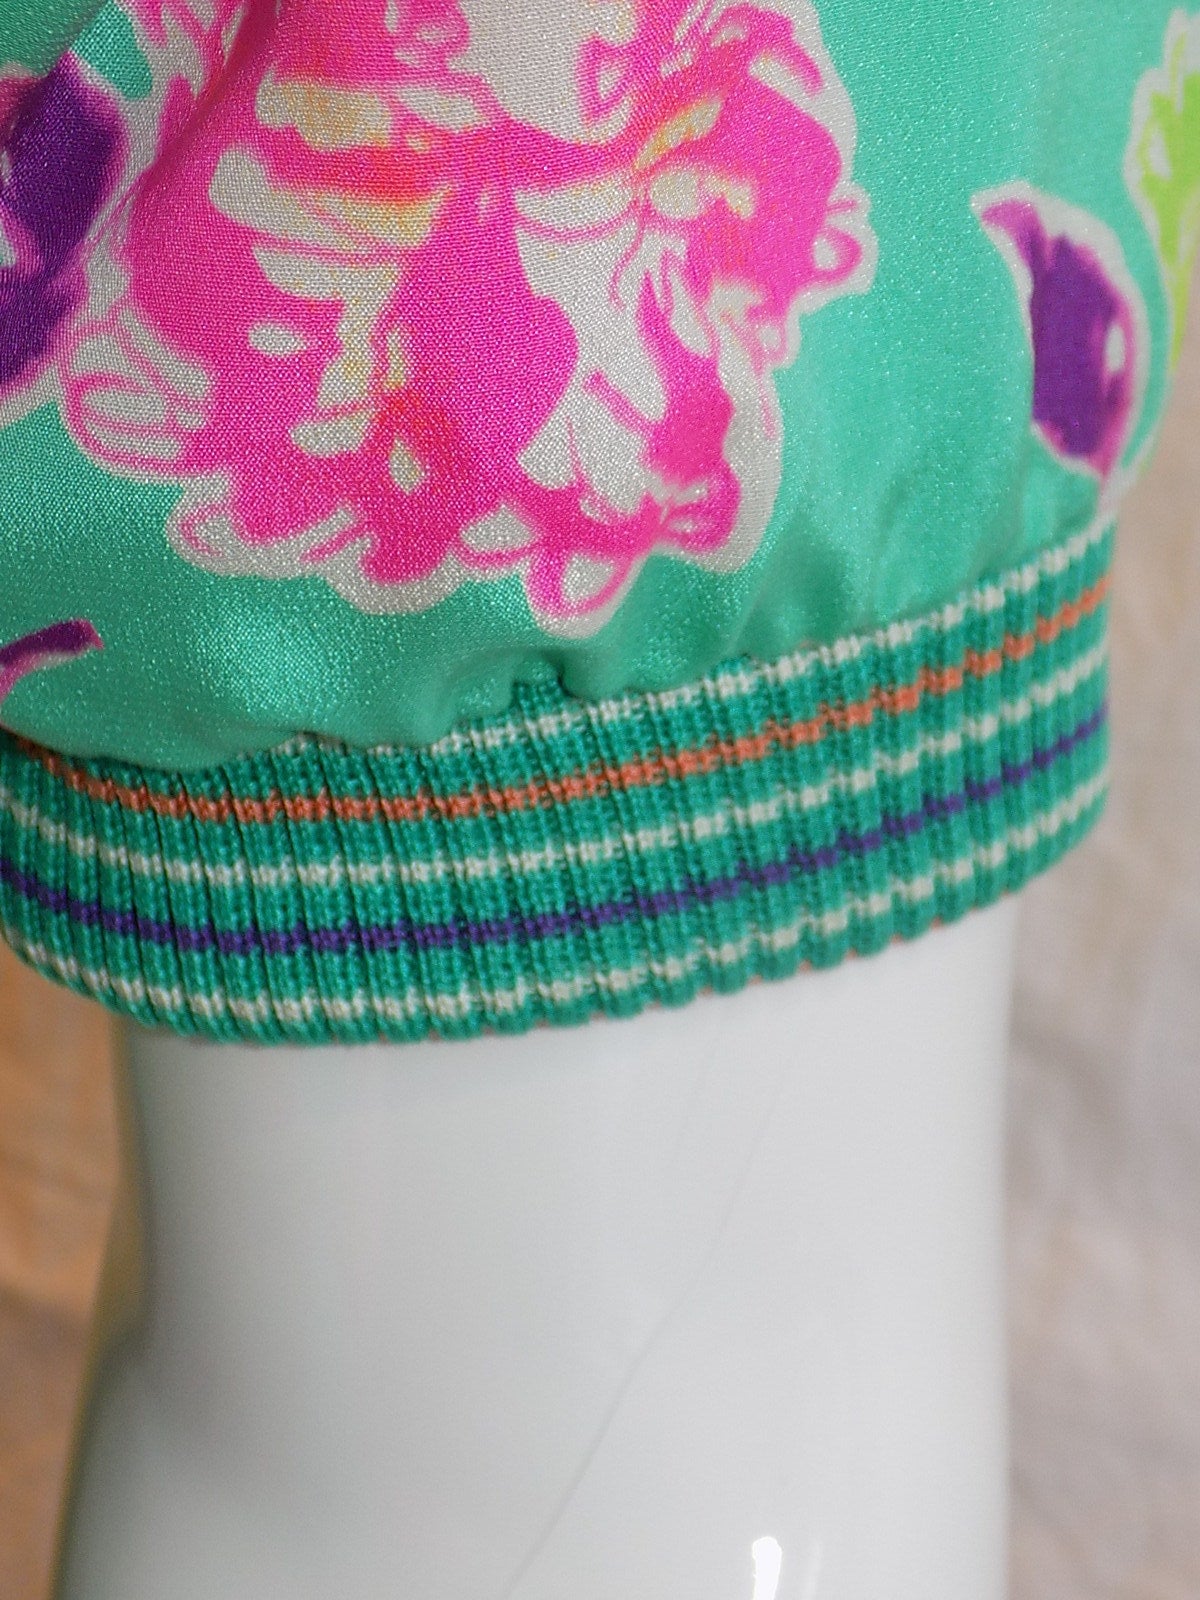 Women's Emanuel Ungaro aqau multicolor floral  silk twill short-sleeve top.